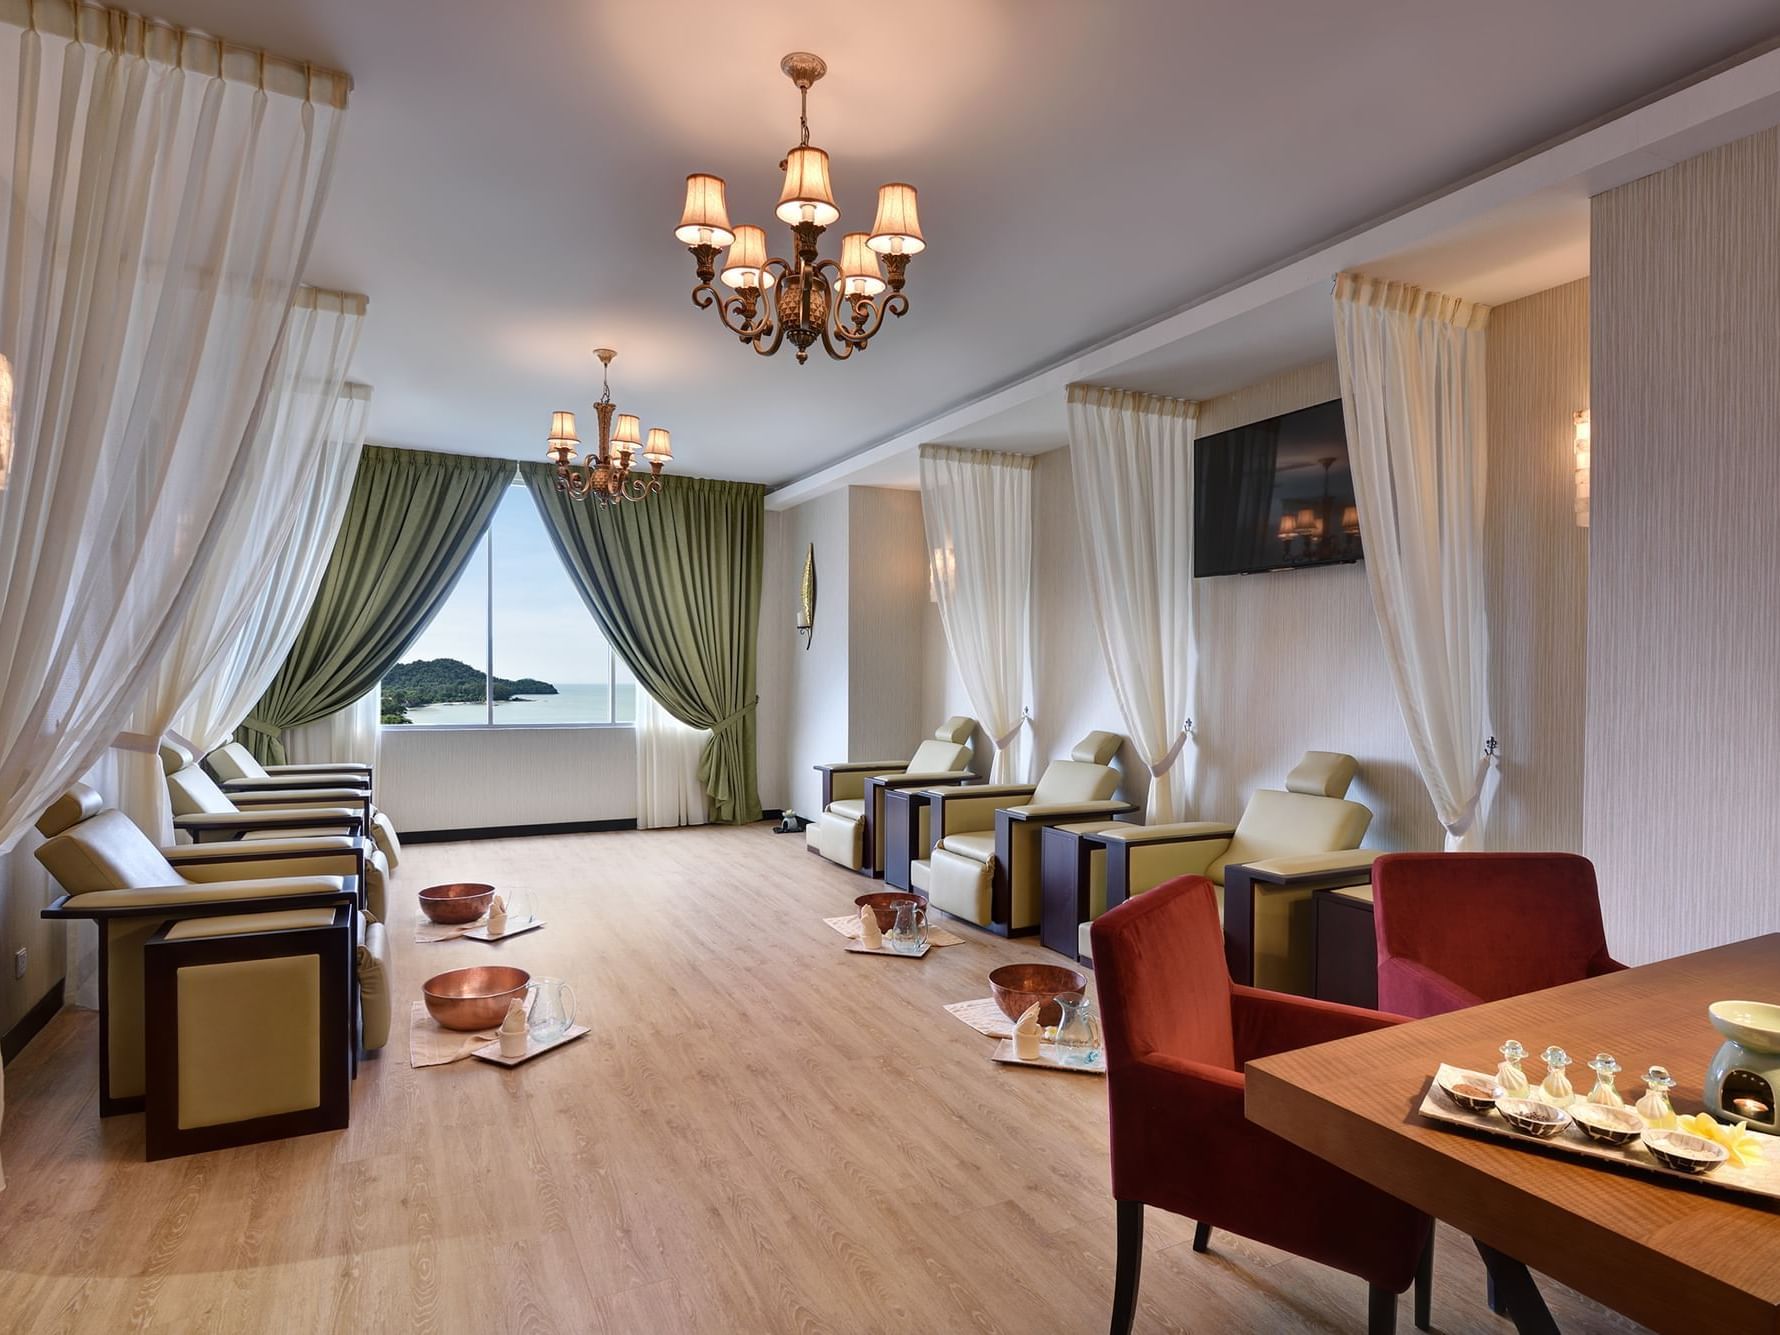 Lexspa Penang Hotel Spa Beauty Massage Spa Treatment